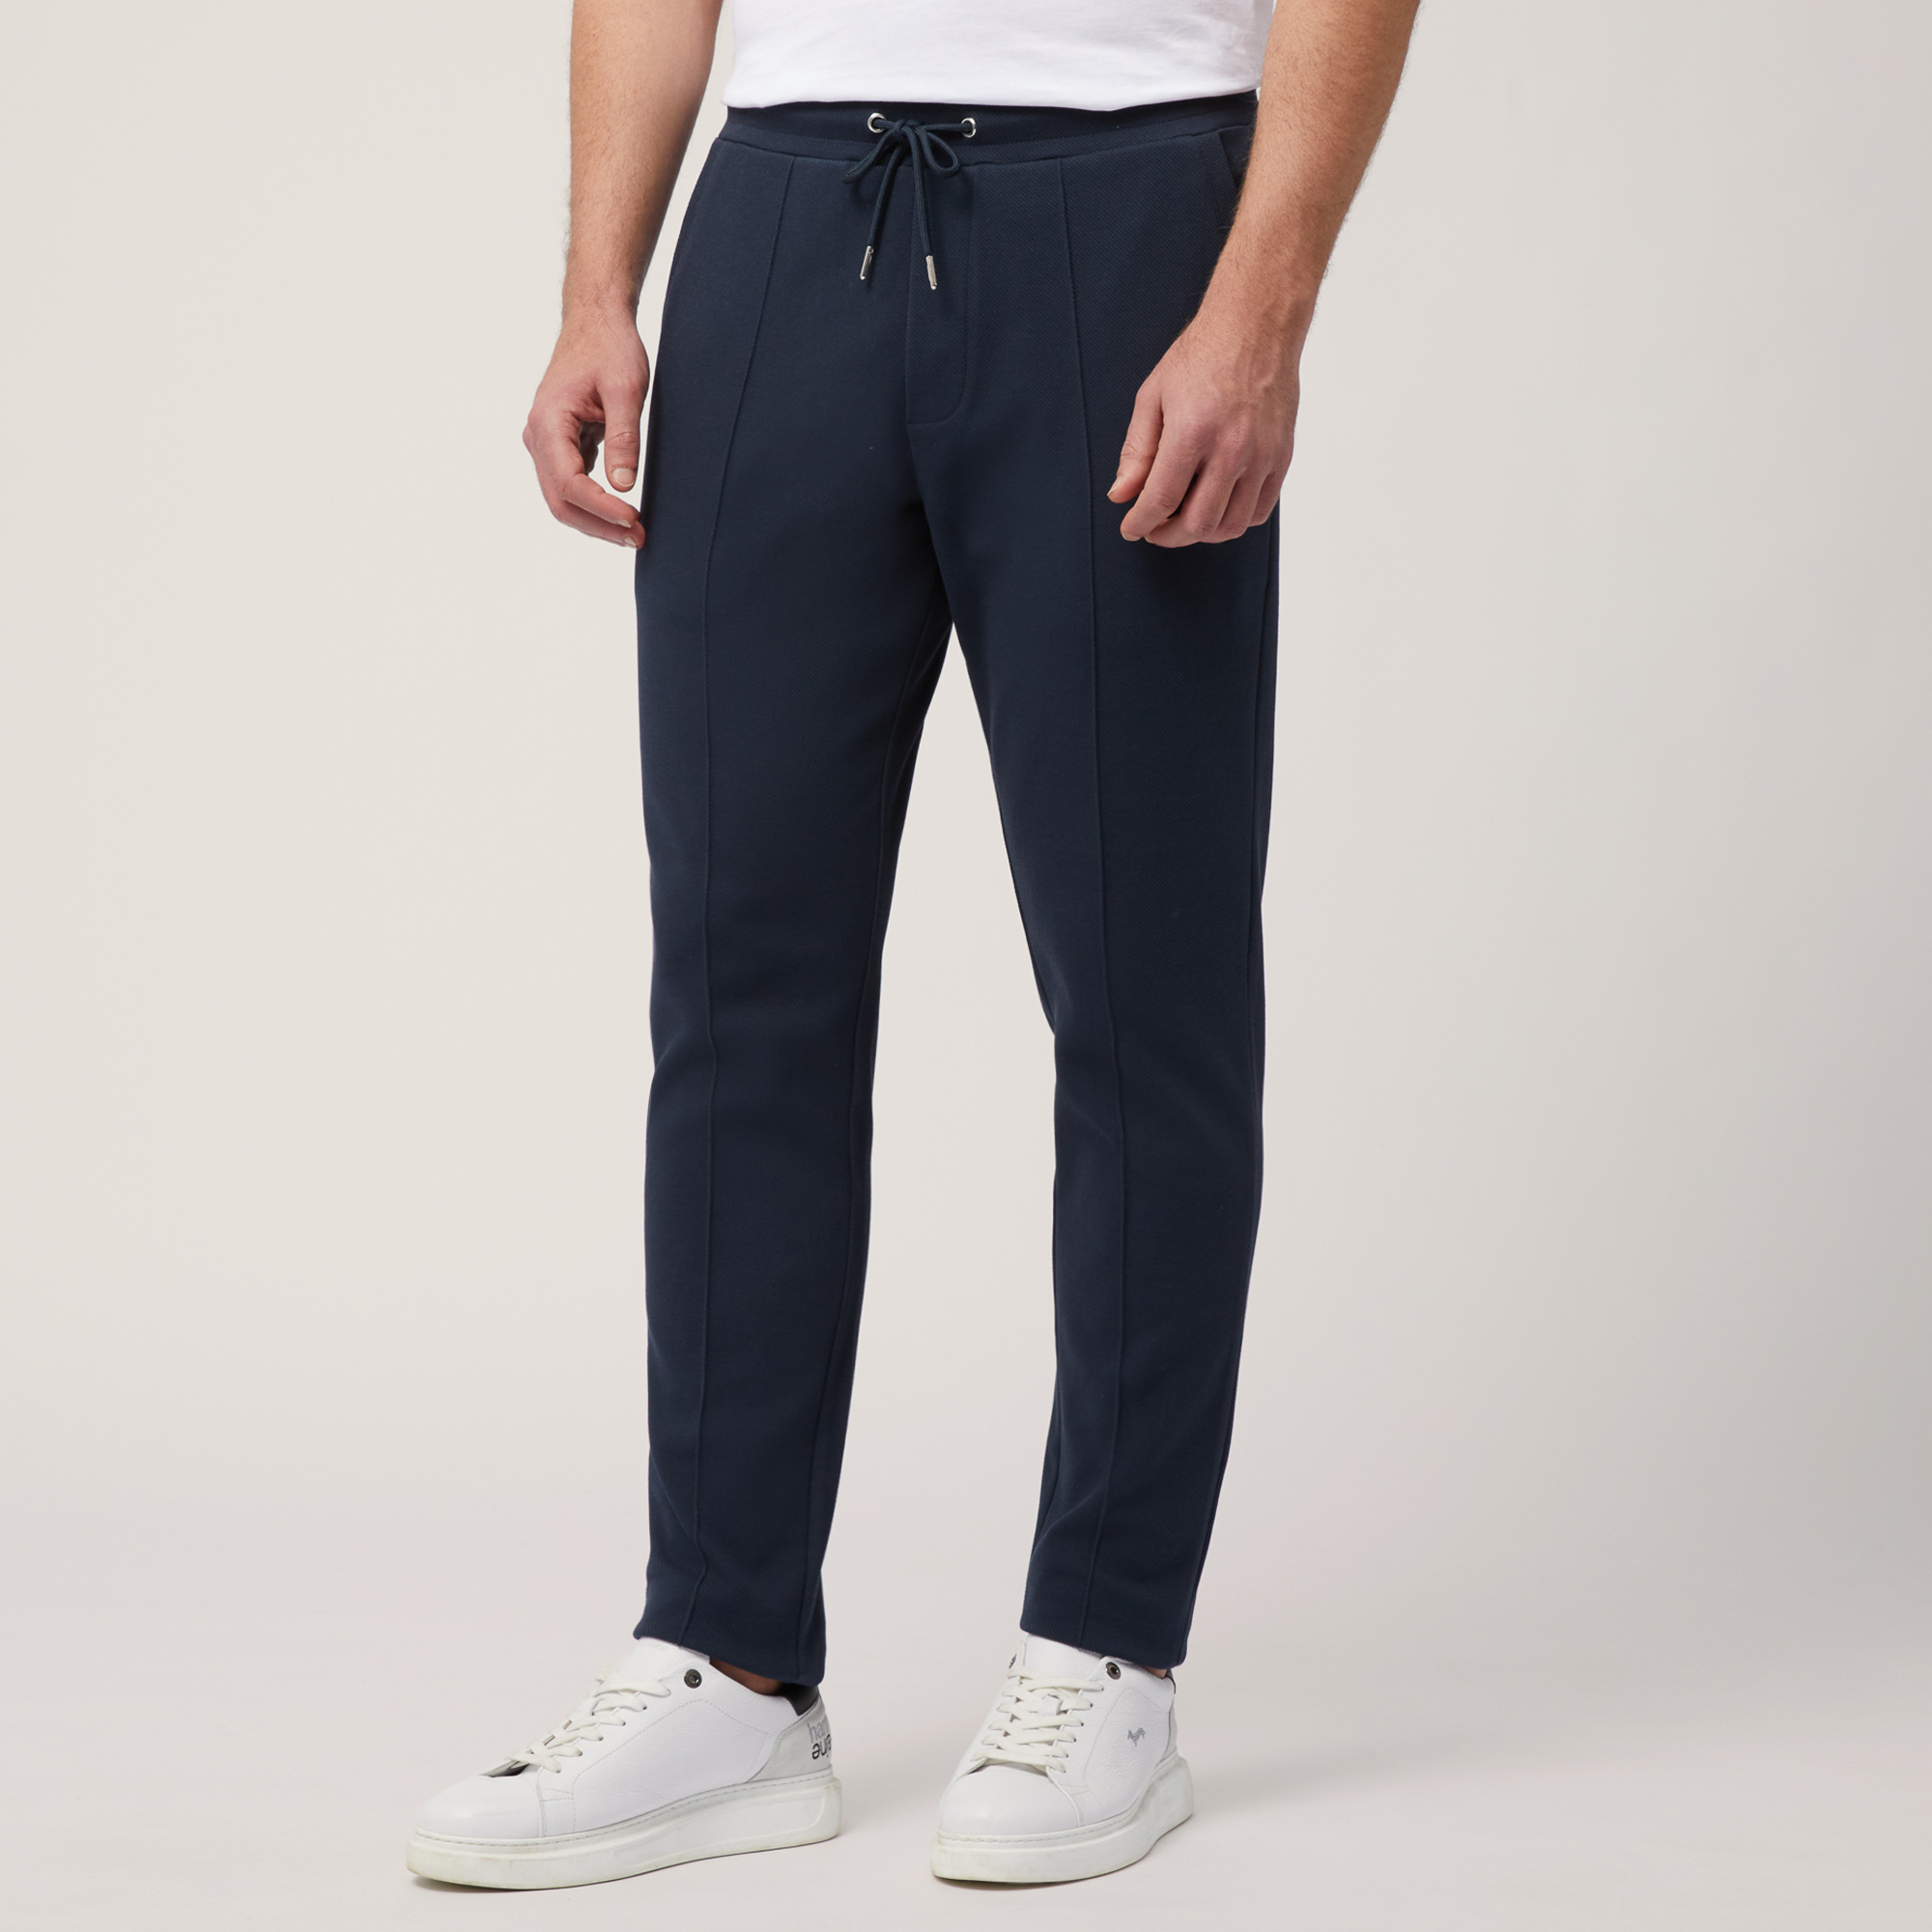 Stretch Cotton Pants with Back Pocket, Blue, large